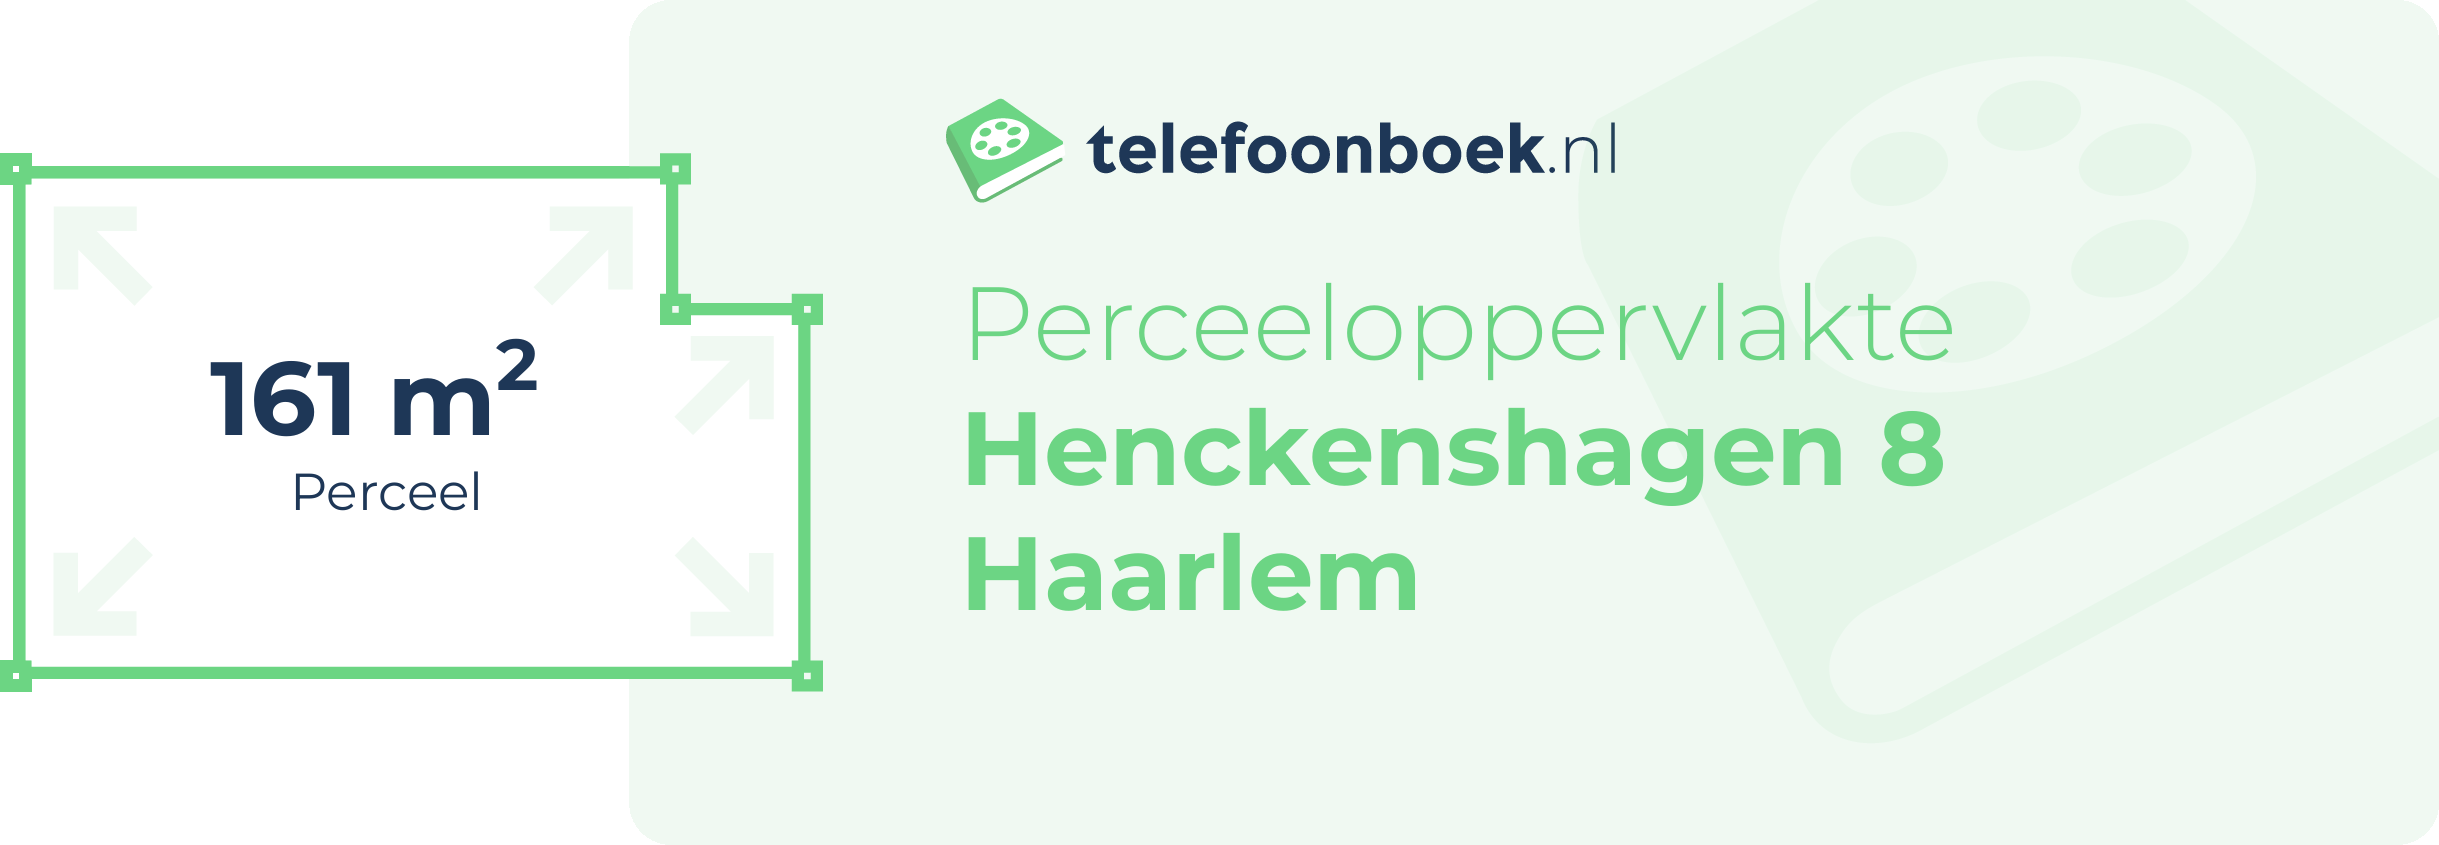 Perceeloppervlakte Henckenshagen 8 Haarlem